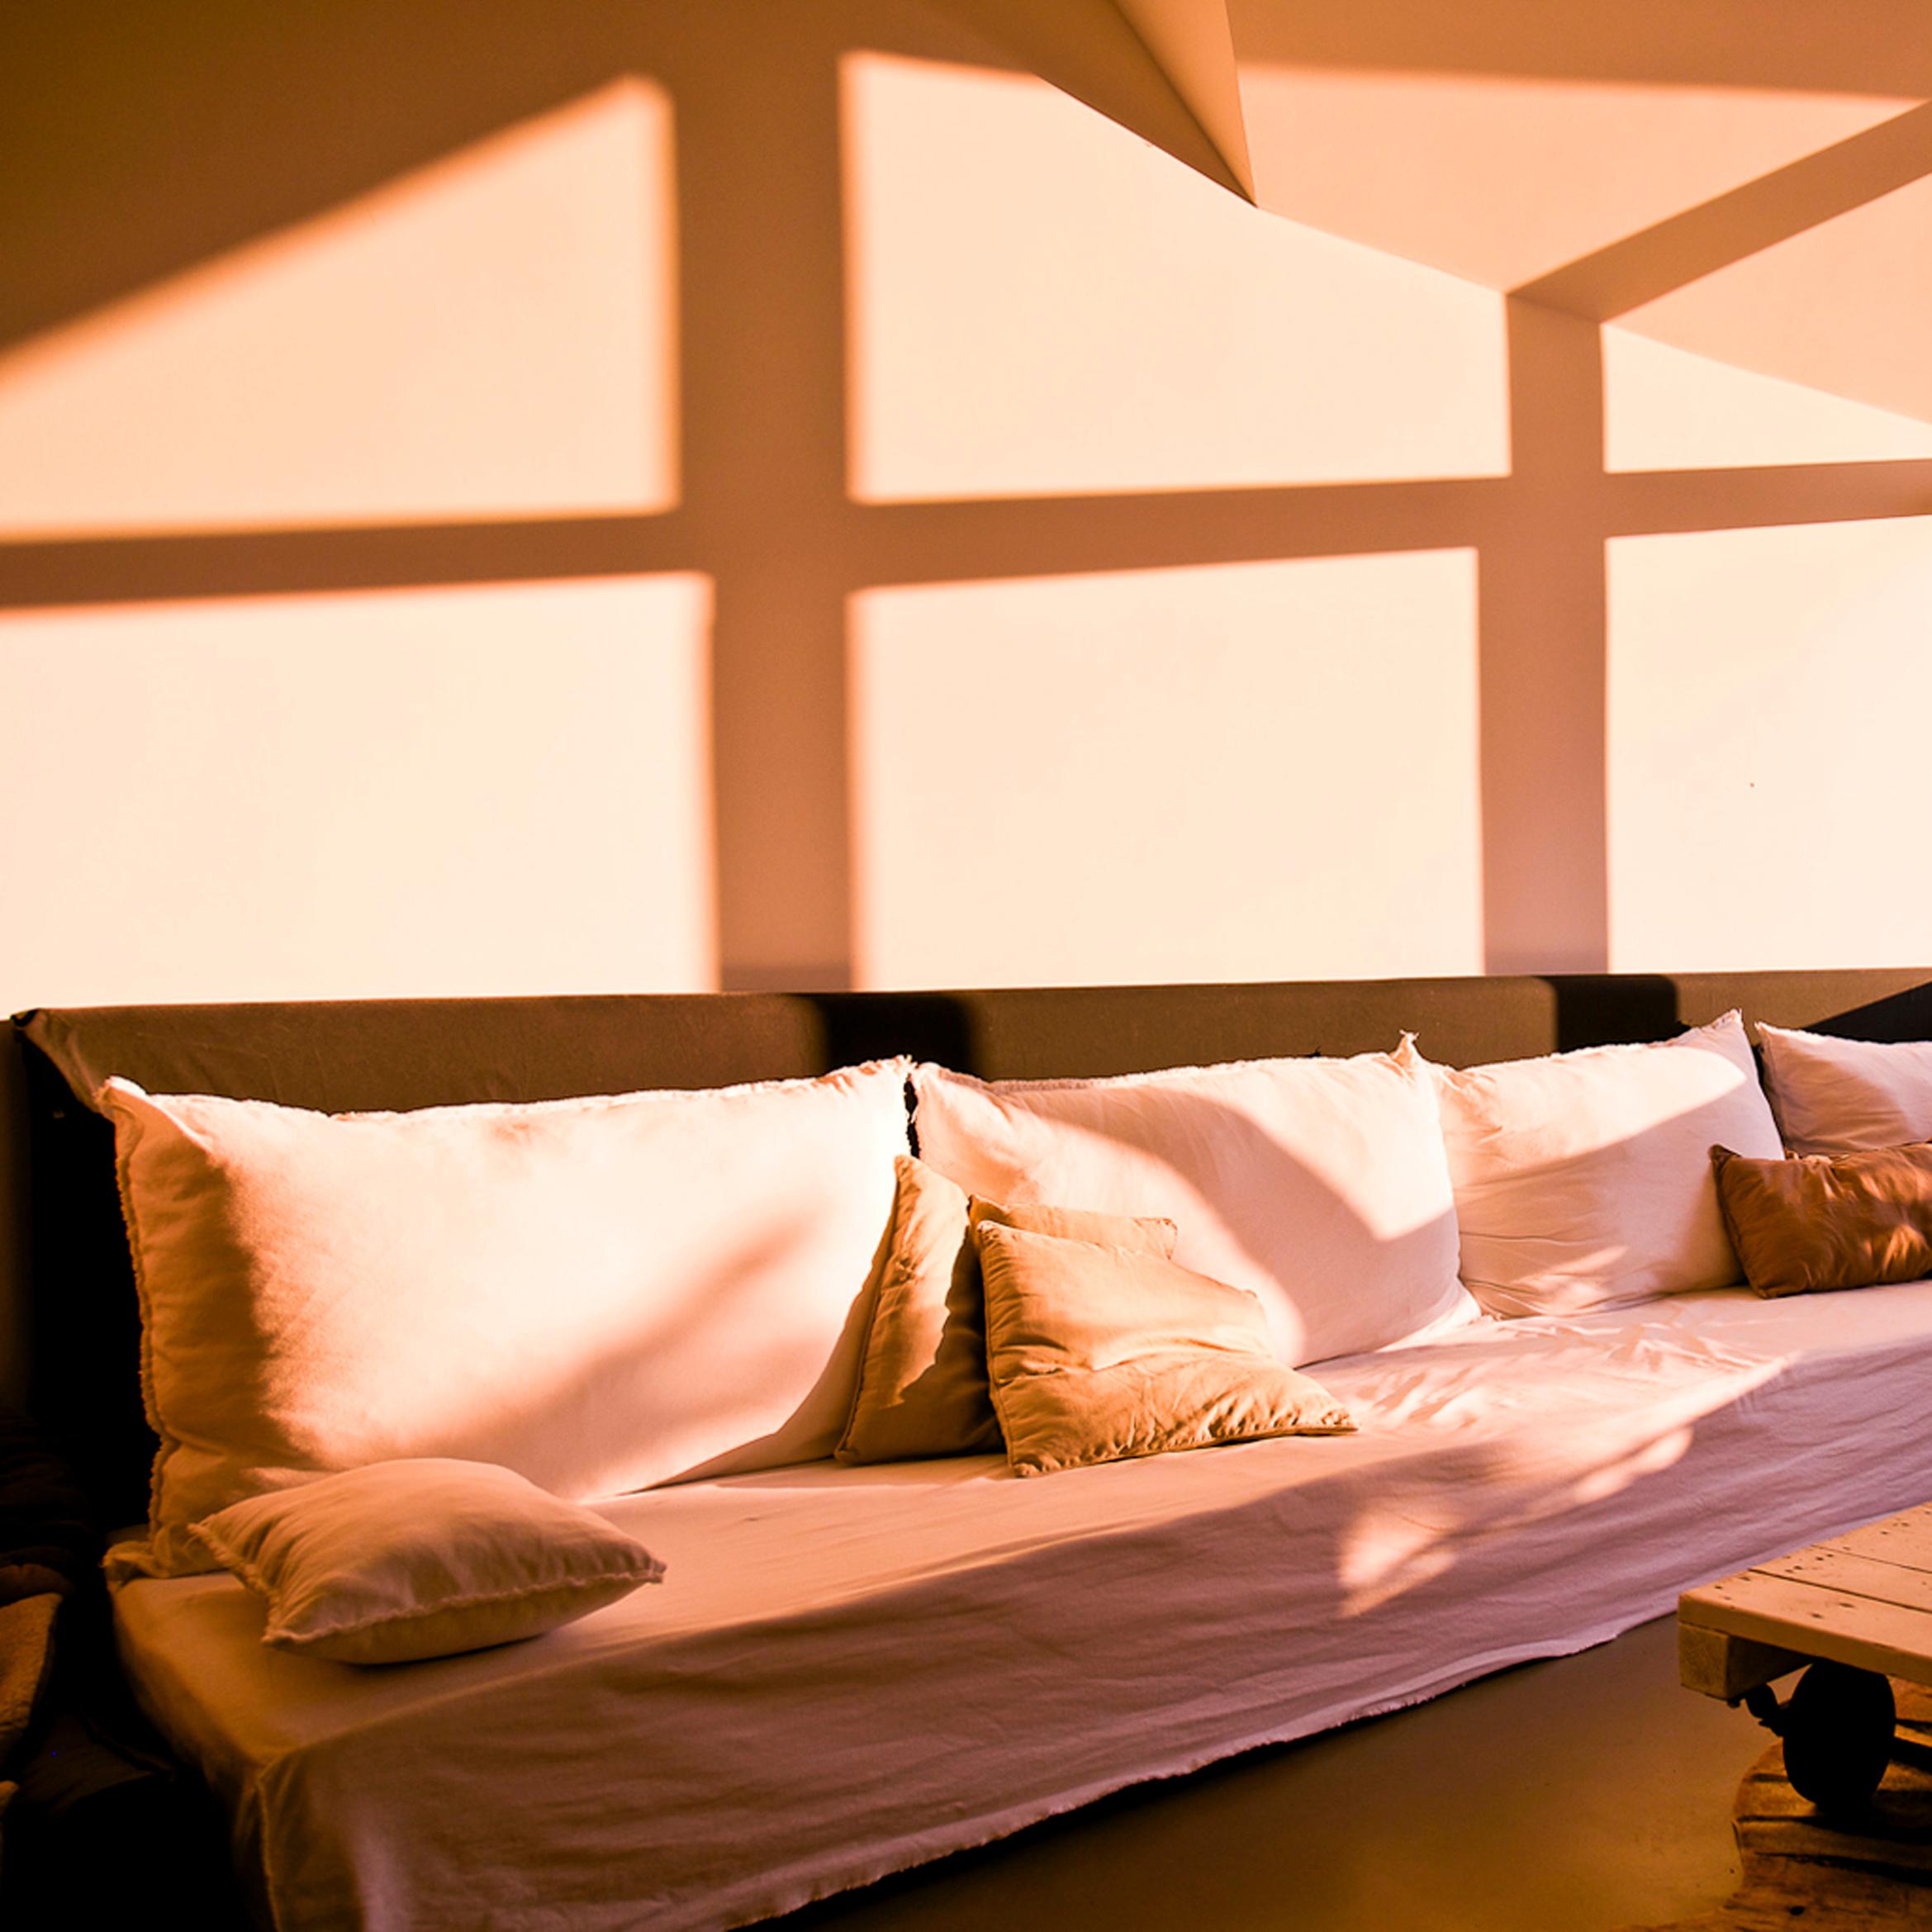 Palettensofa in der Abendsonne #wohnzimmer #sofa #palettensofa ©Zolaproduction